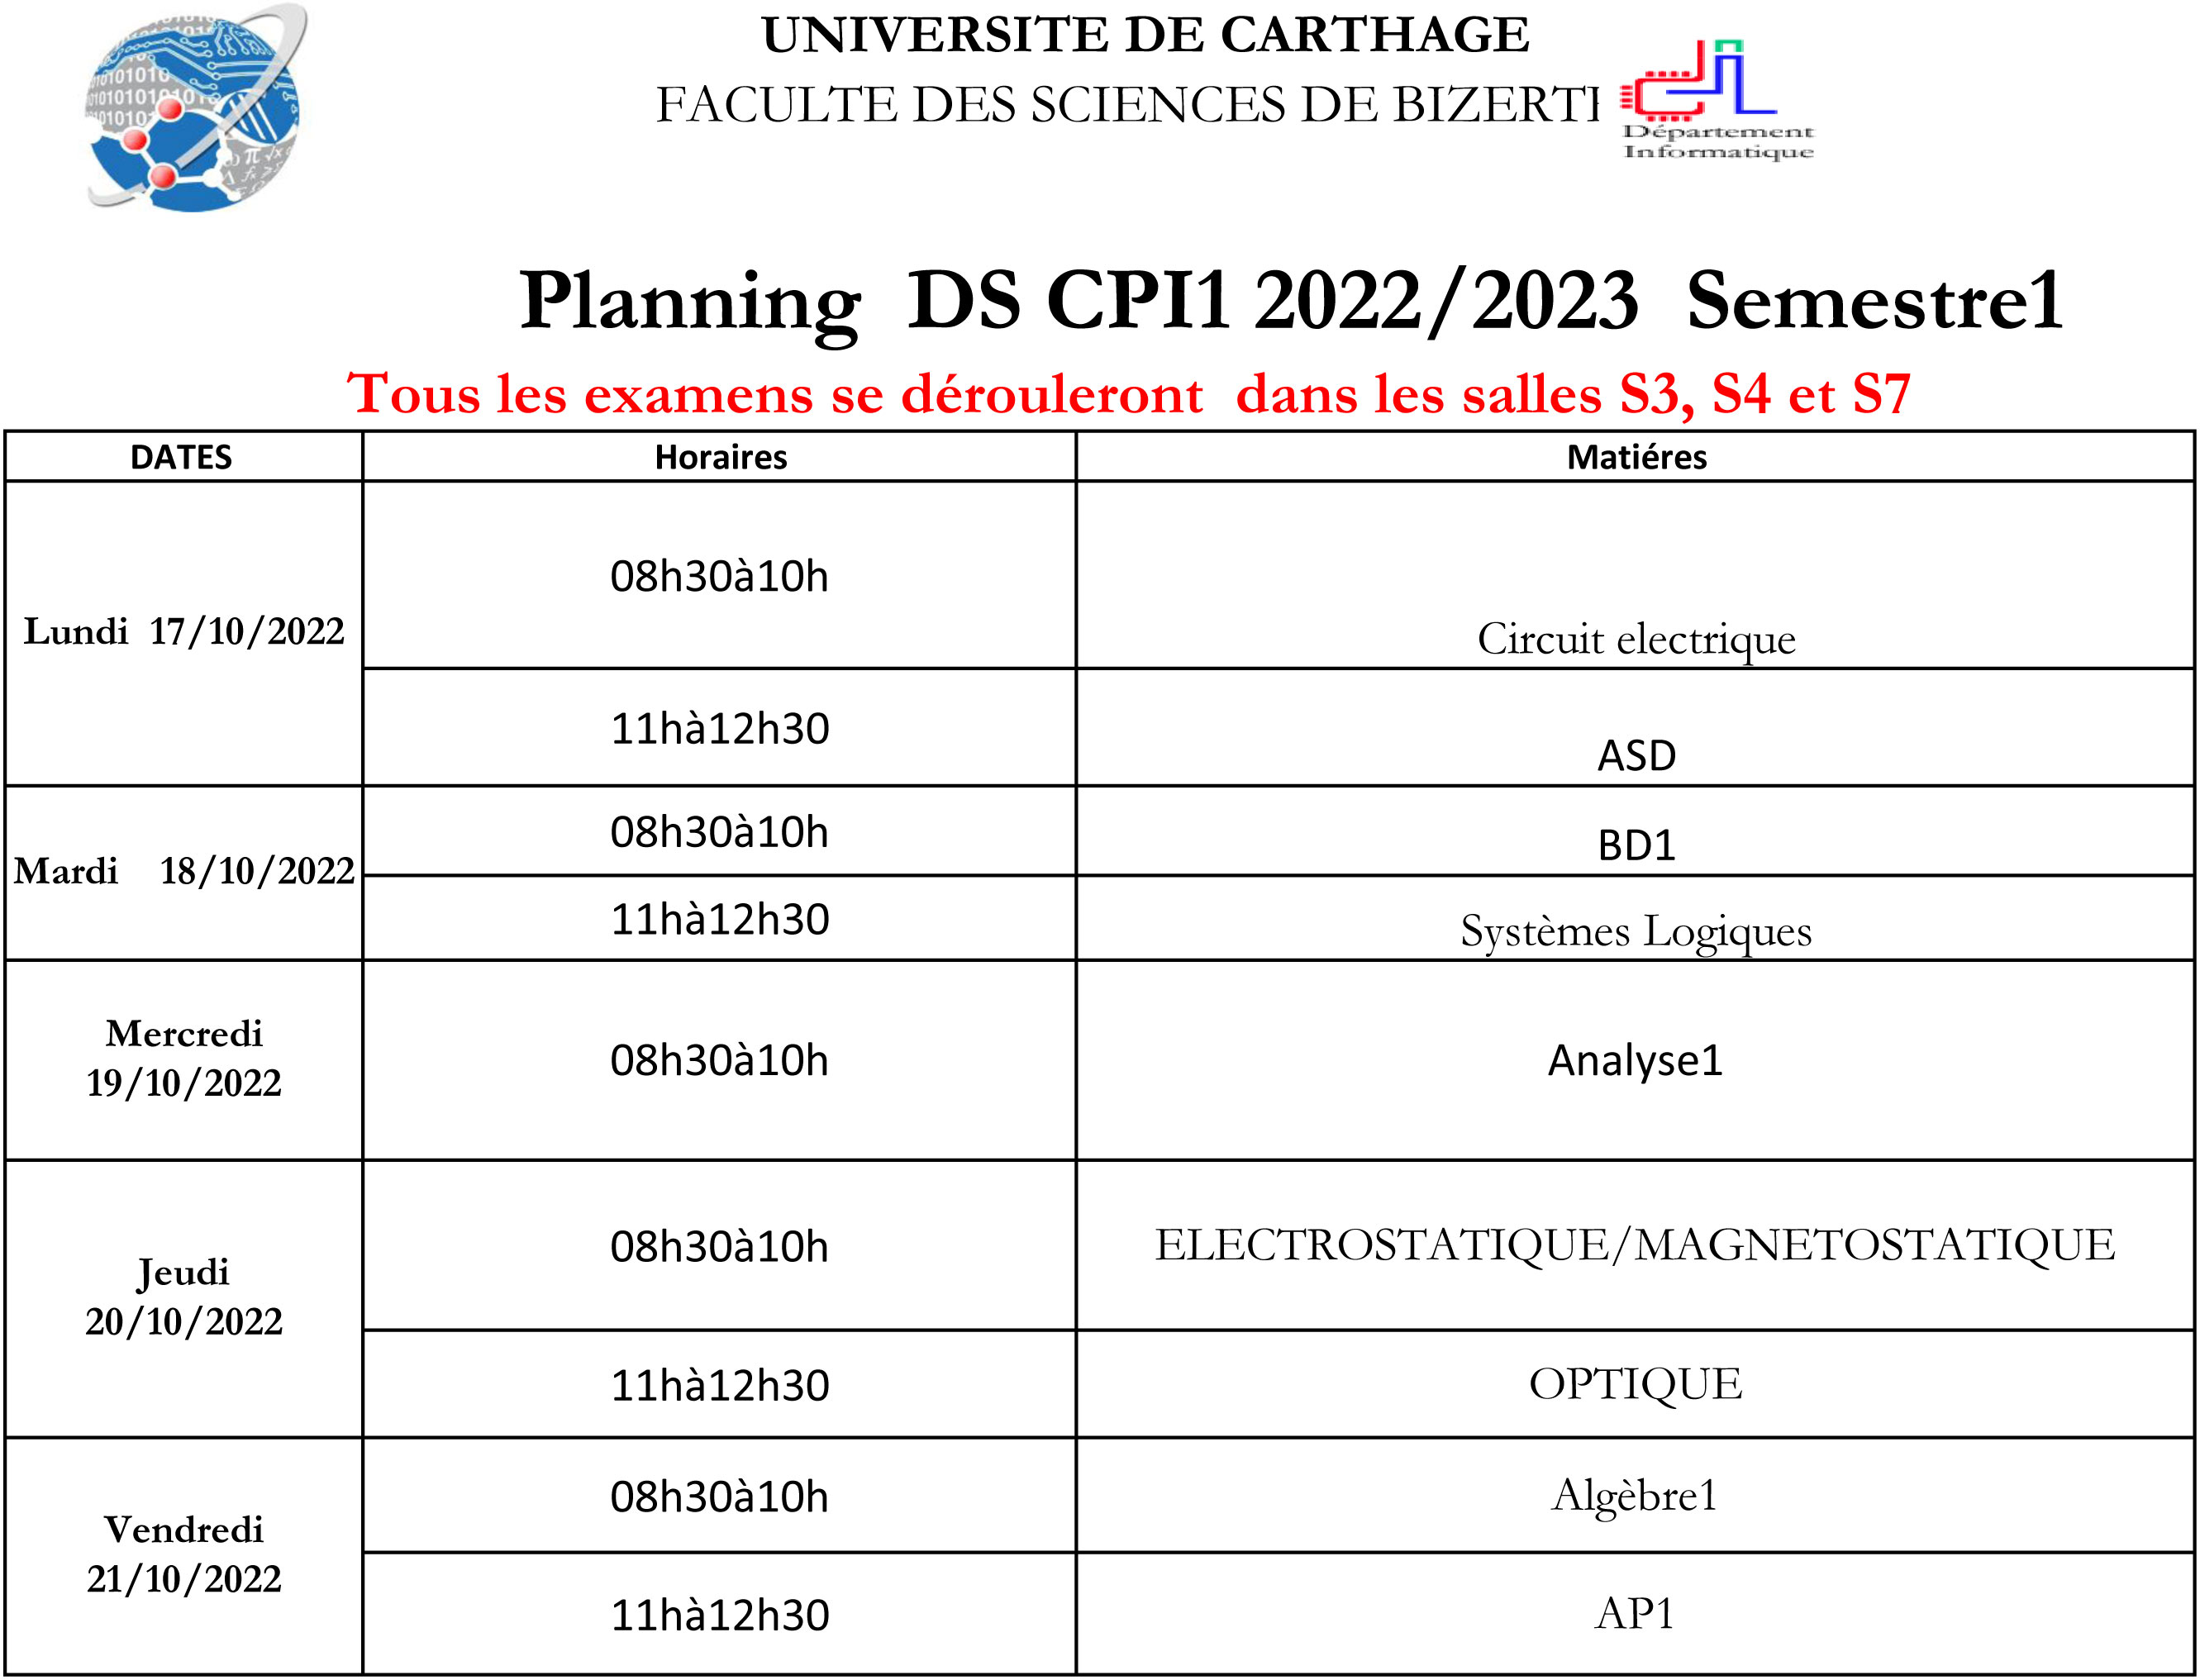 Planning DS CI CPI 2